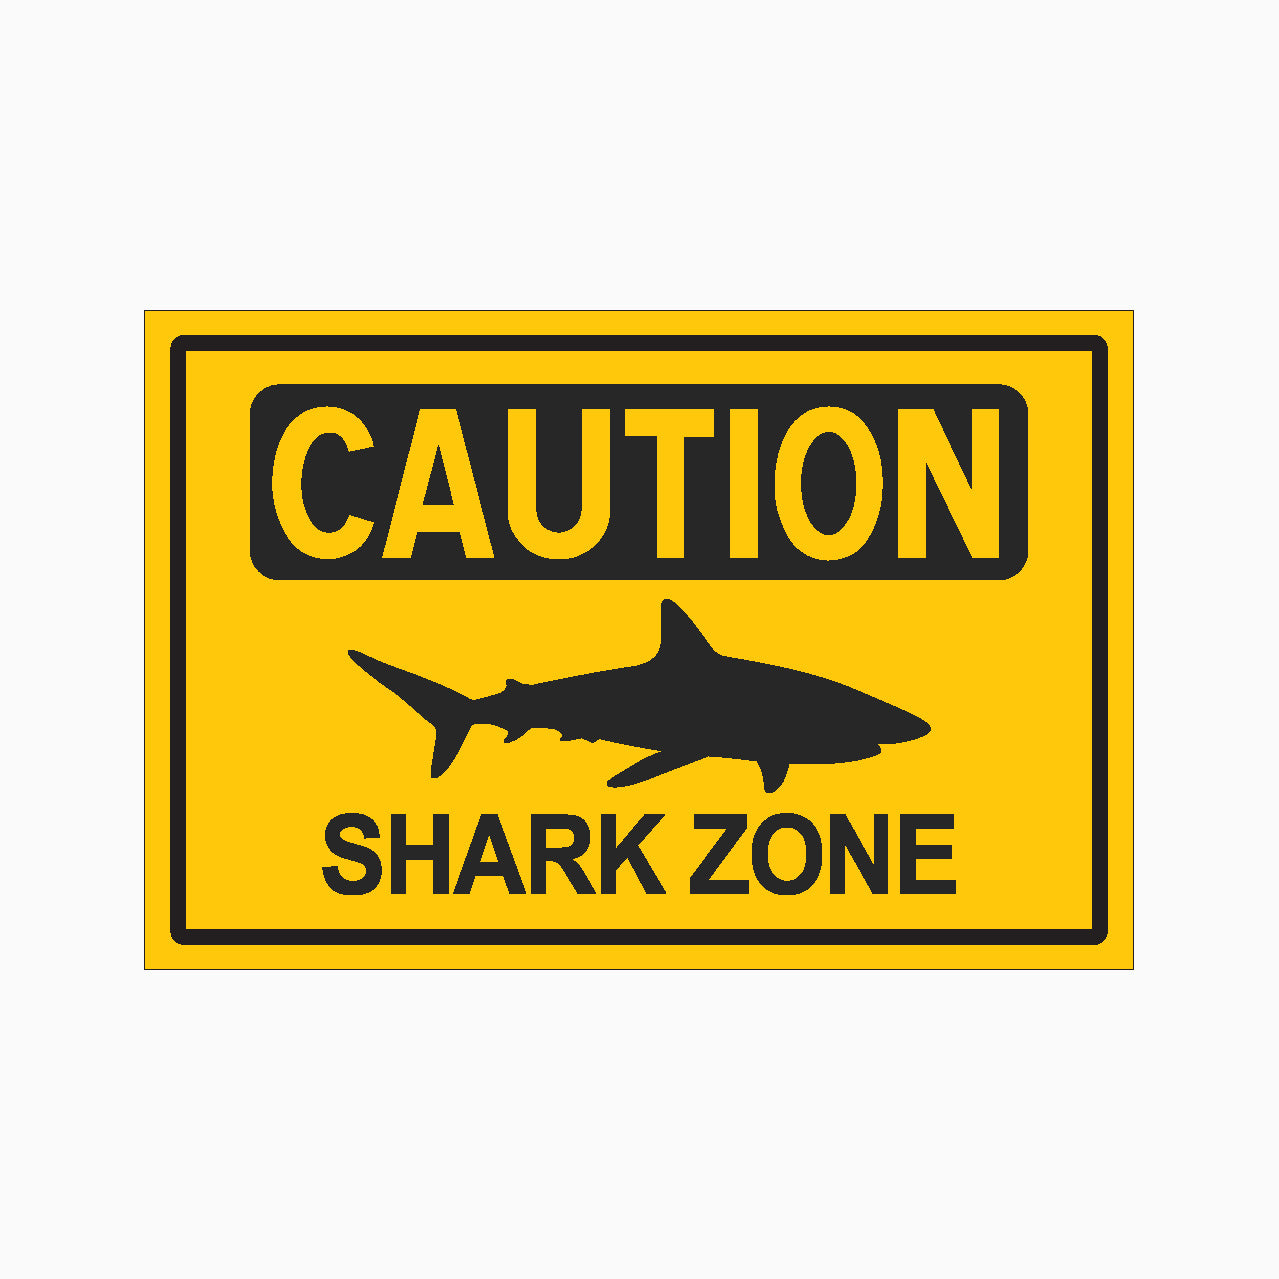 CAUTION SHARK ZONE SIGN